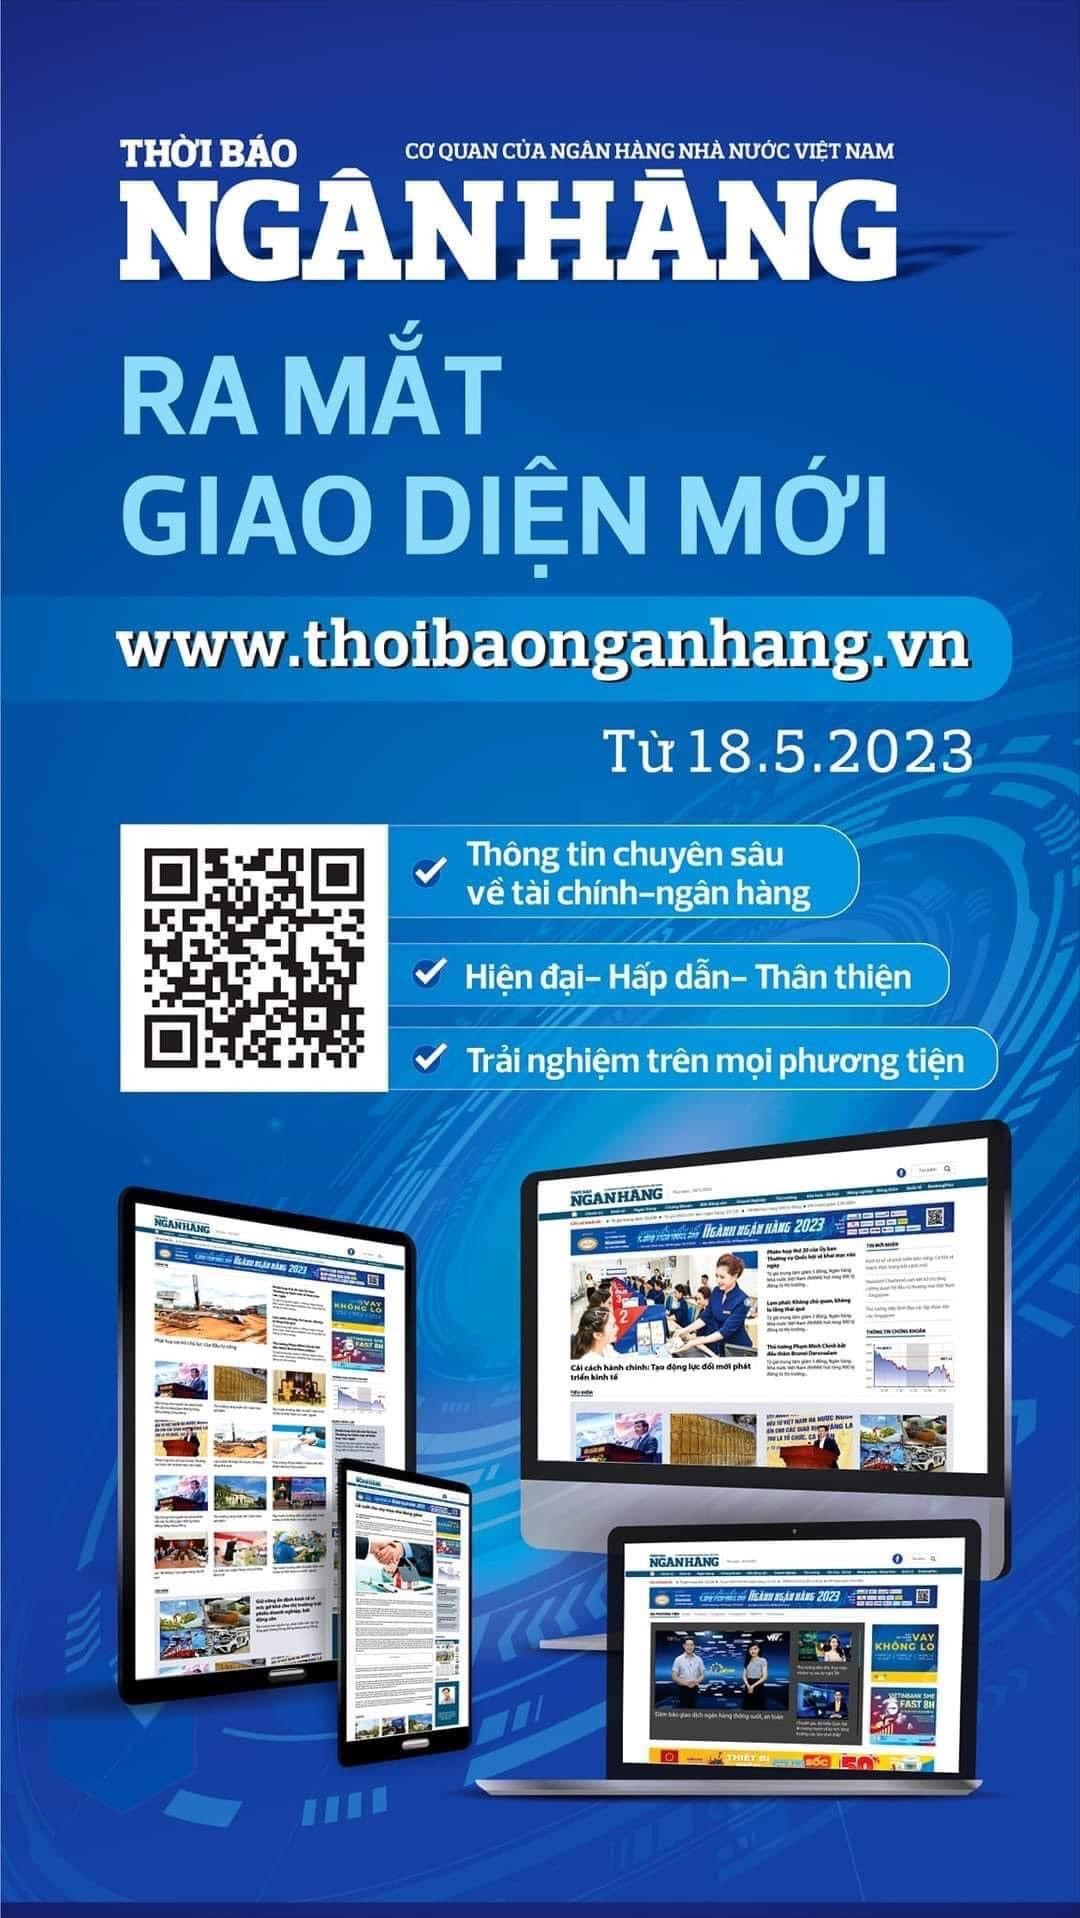 Nguyen TBT Thoi bao Ngan hang Nguyen Lan Anh: “Neu duoc chon lai, toi van se lam bao“